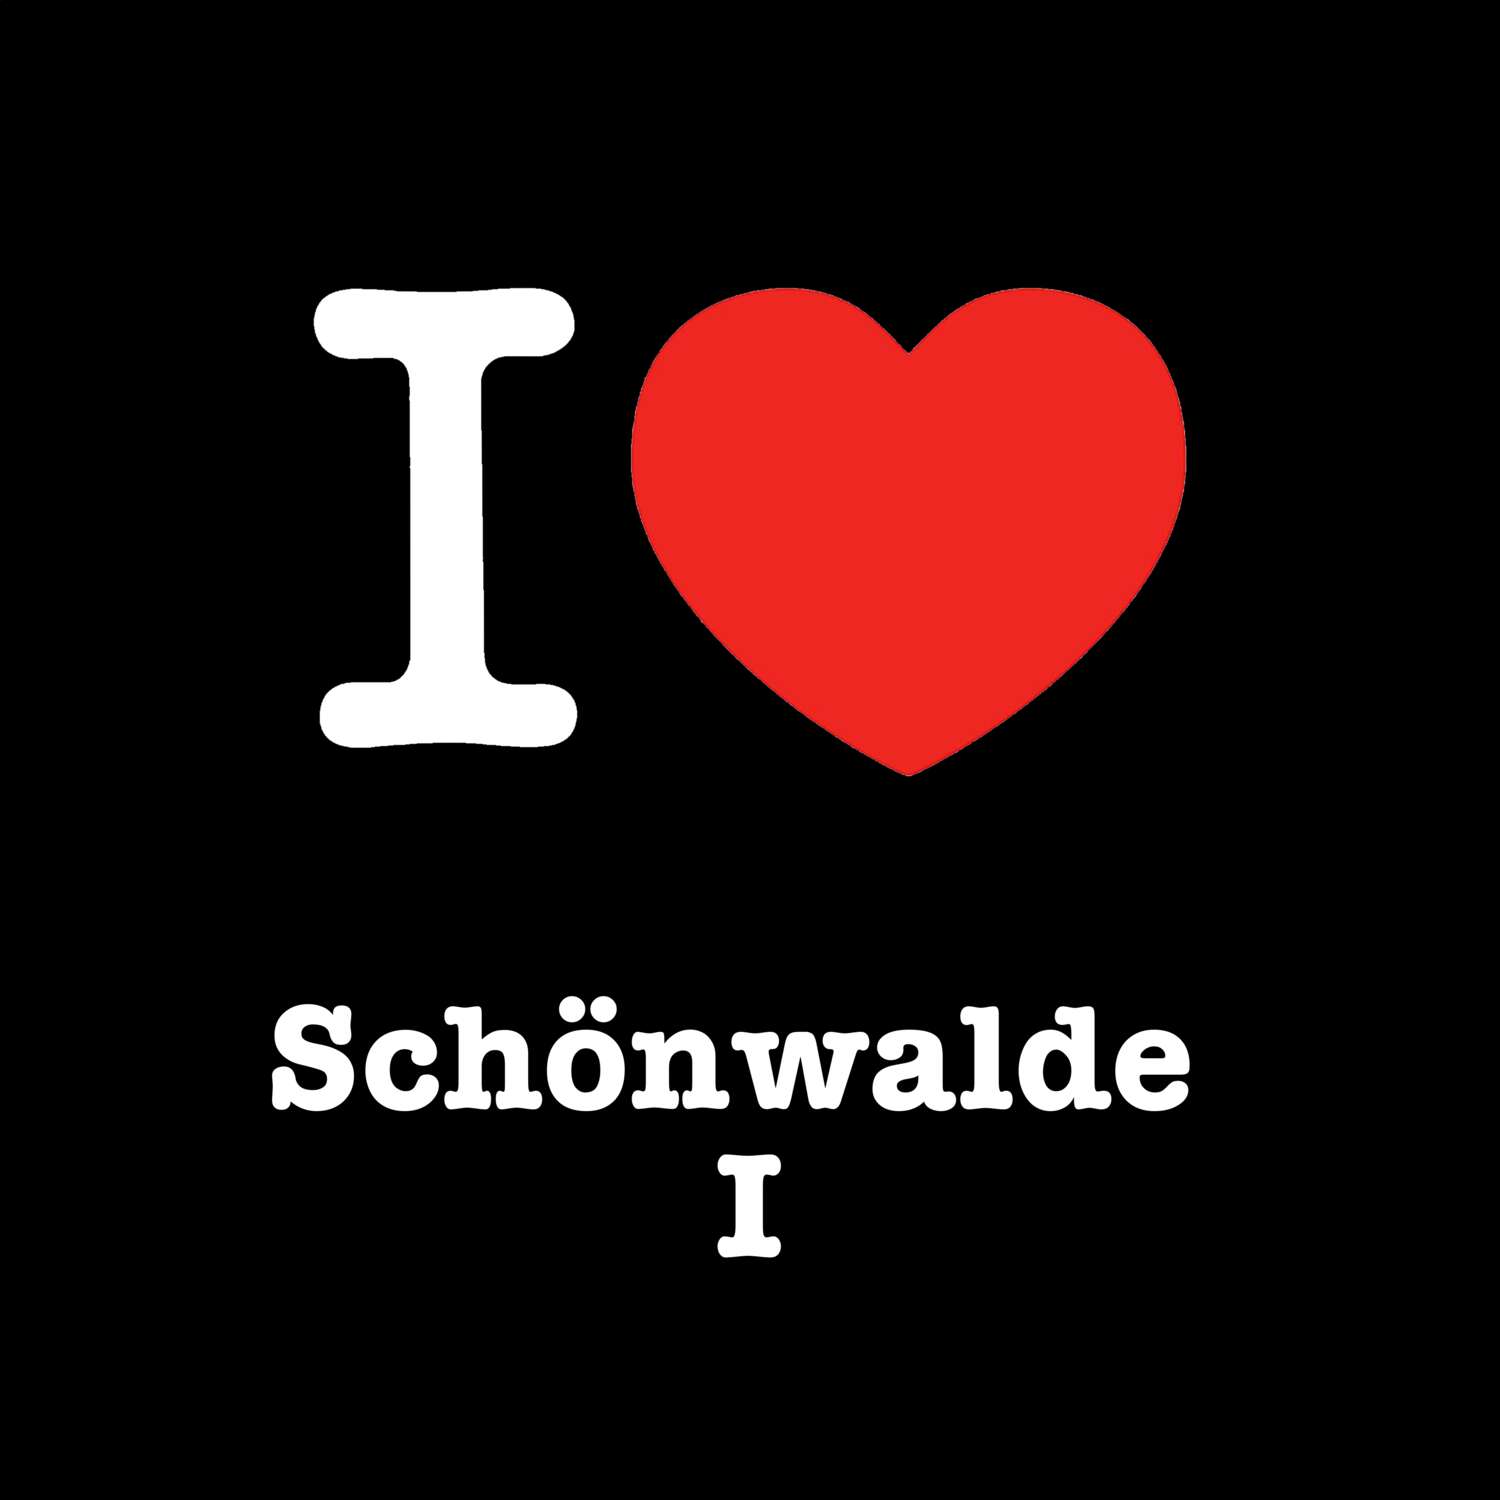 Schönwalde I T-Shirt »I love«